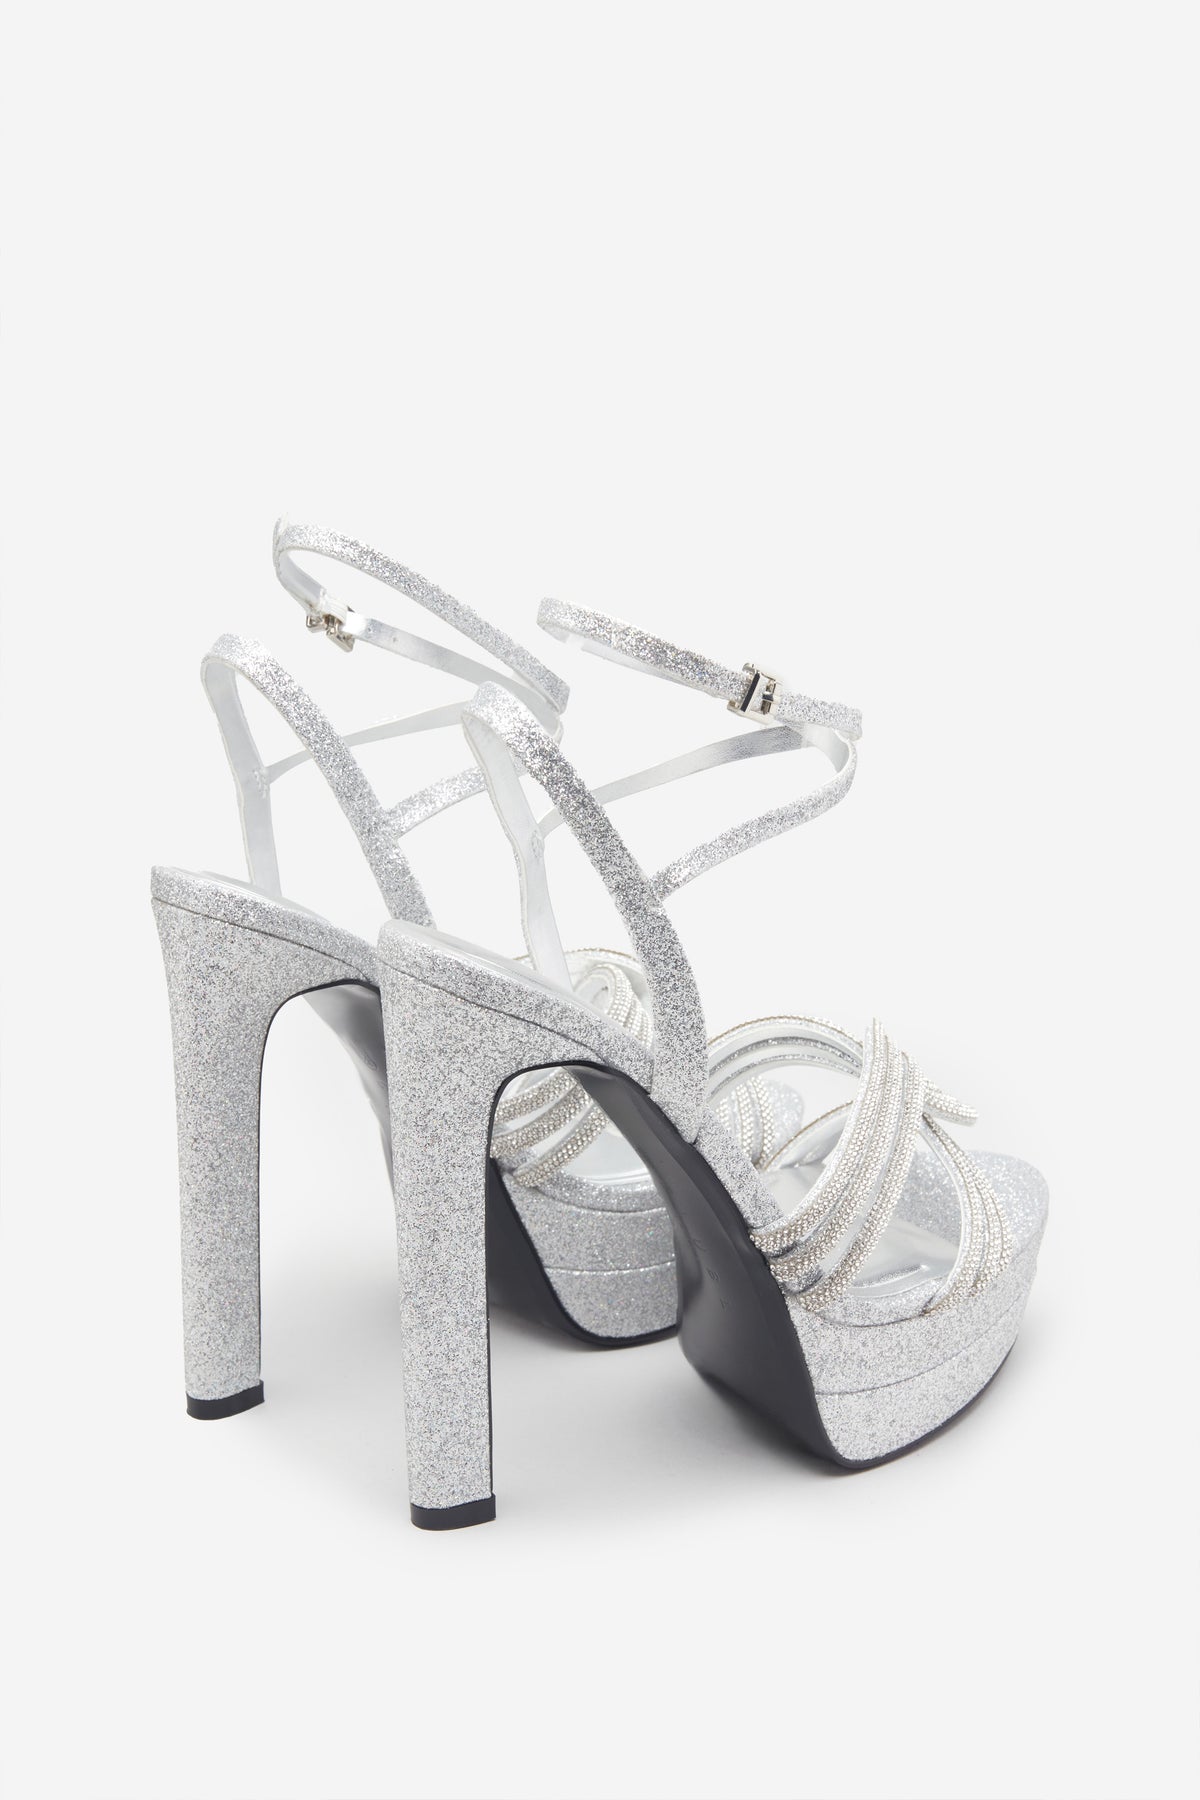 JIMMY CHOO: Saeda pumps in glittery fabric - Silver | Jimmy Choo high heel  shoes SAEDA100BBG online at GIGLIO.COM